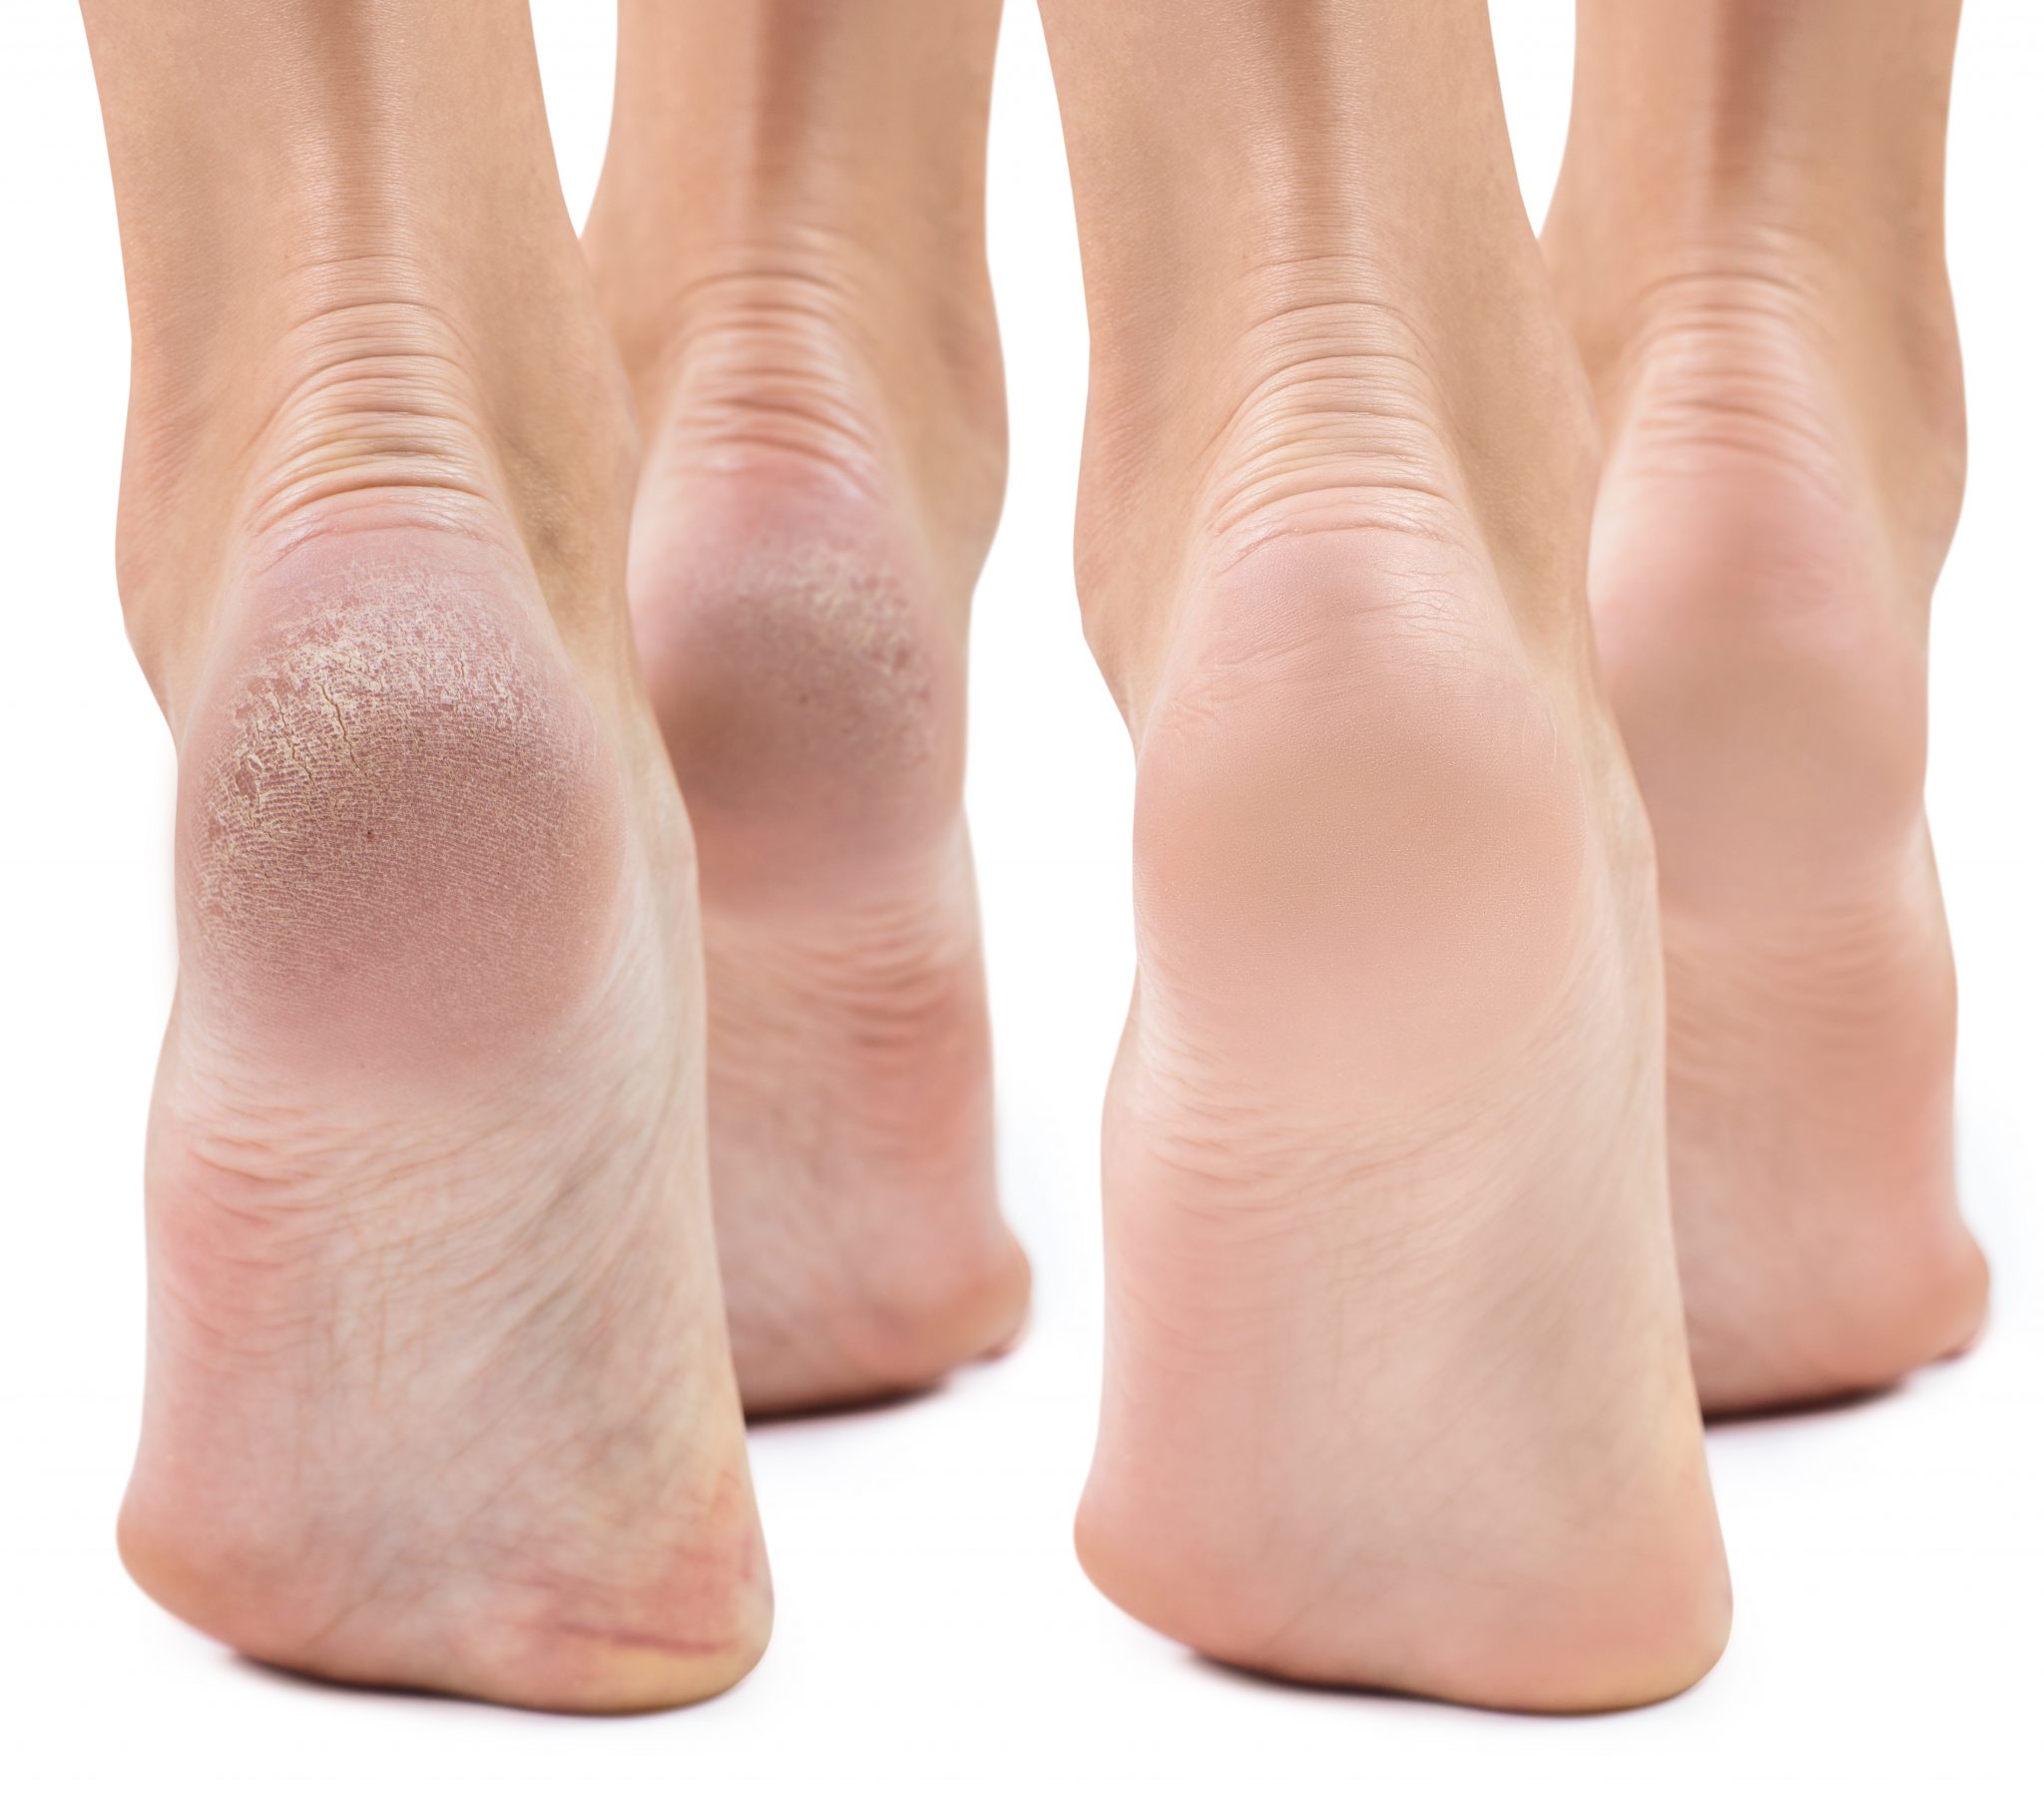 Foot Eczema vs Athlete's Foot